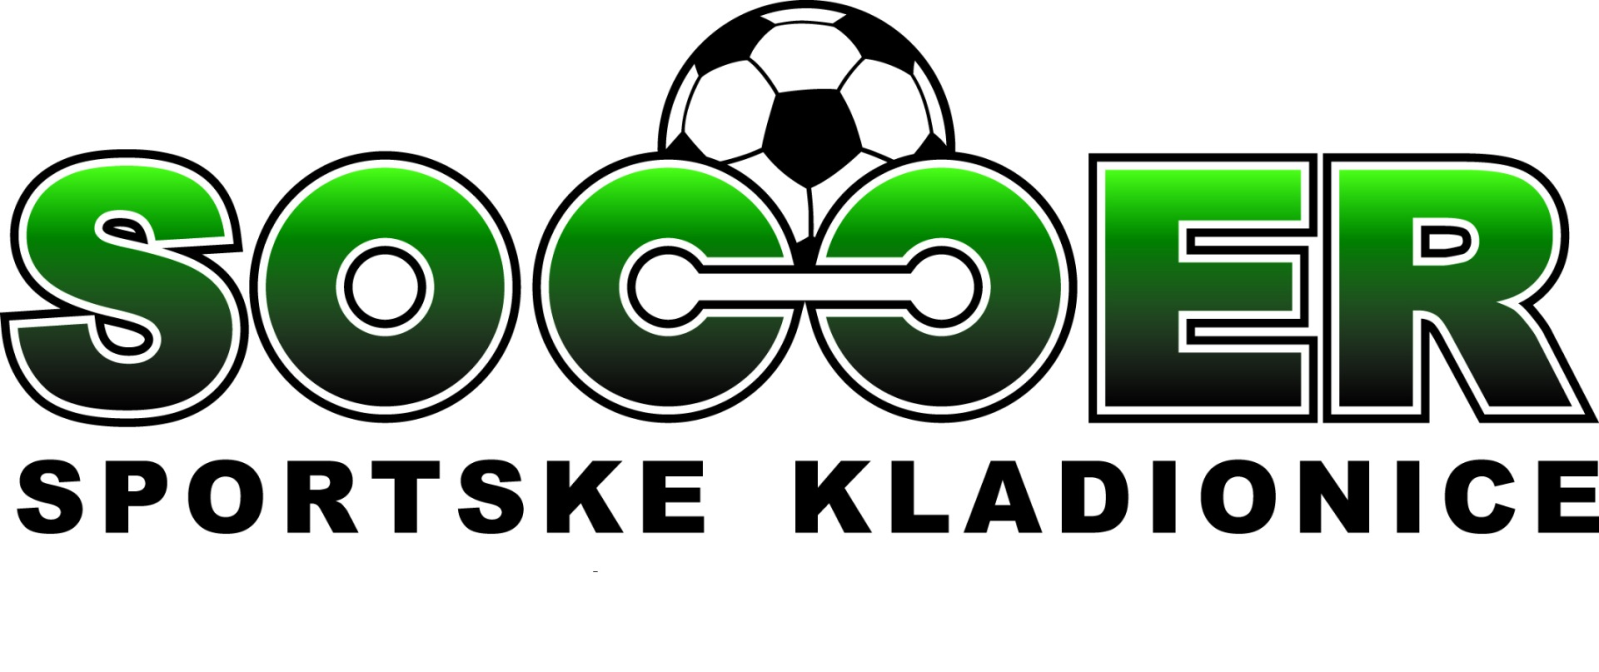 Букмекерские конторы логотипы. Sportske_Cross.